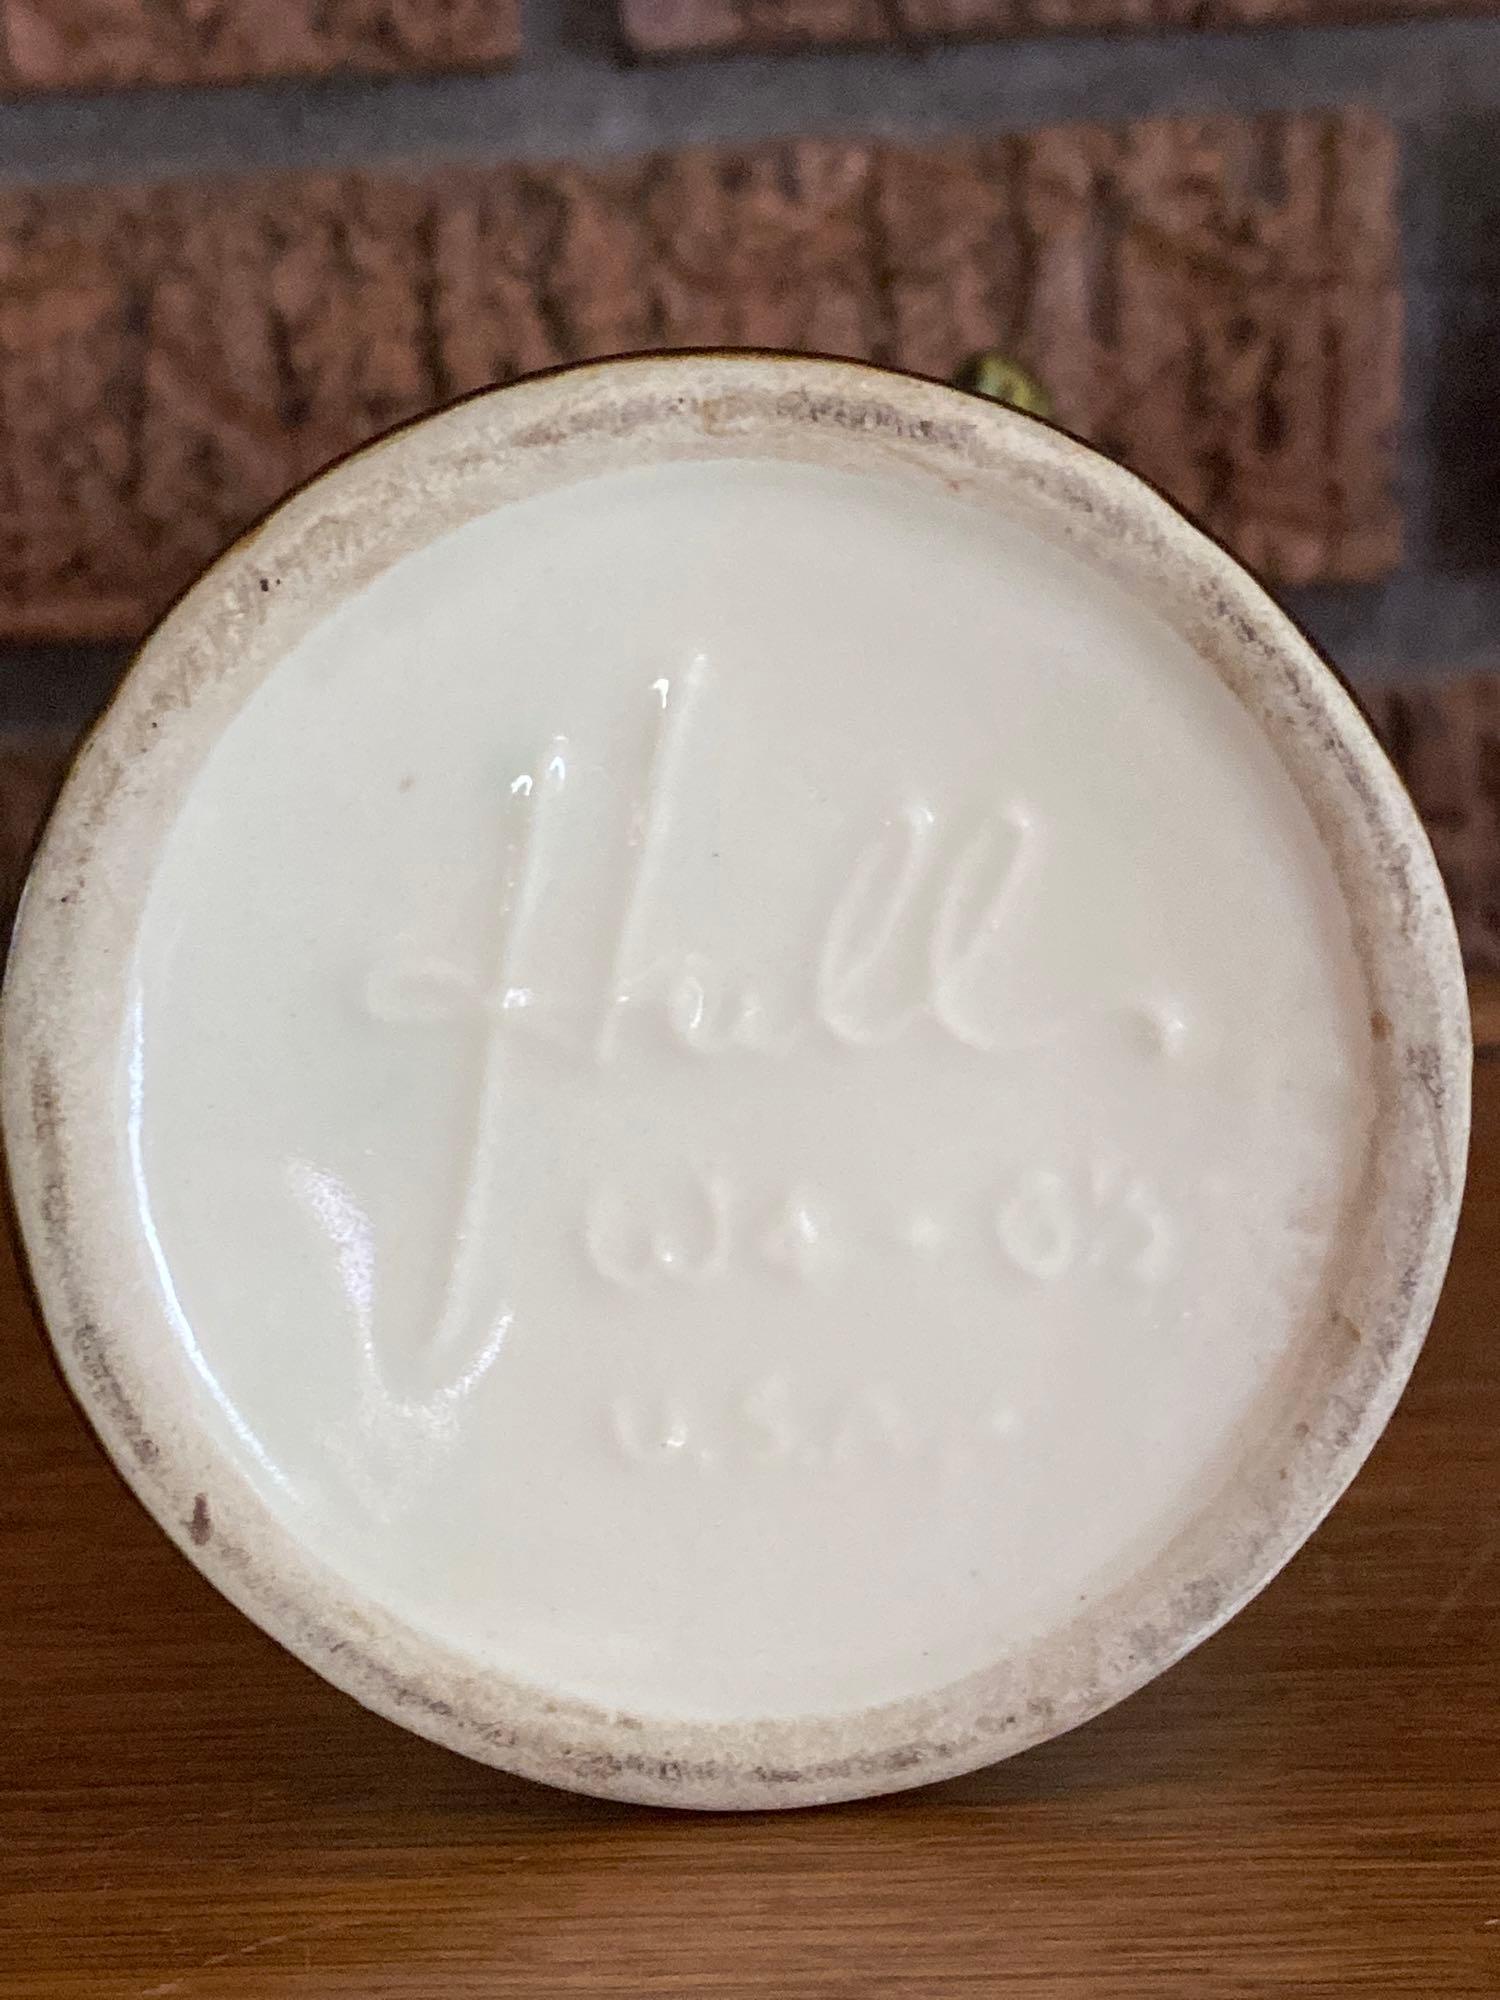 Signed Hull Handled Blue Green Ceramic Vase - Rare